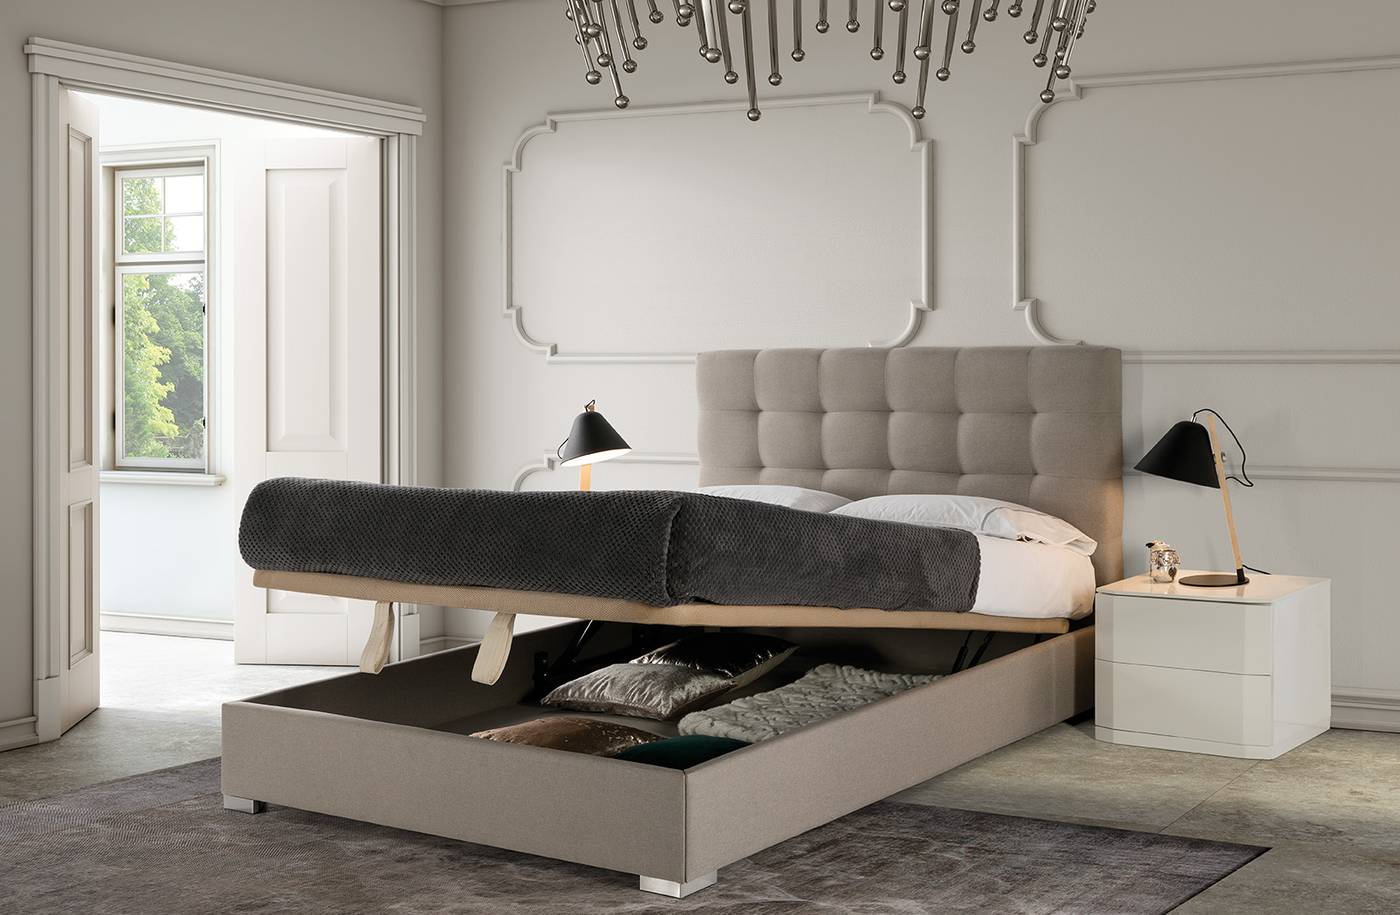 cama bajo otra cama - Buscar con Google  Sleepover beds, Single bed frame,  Room